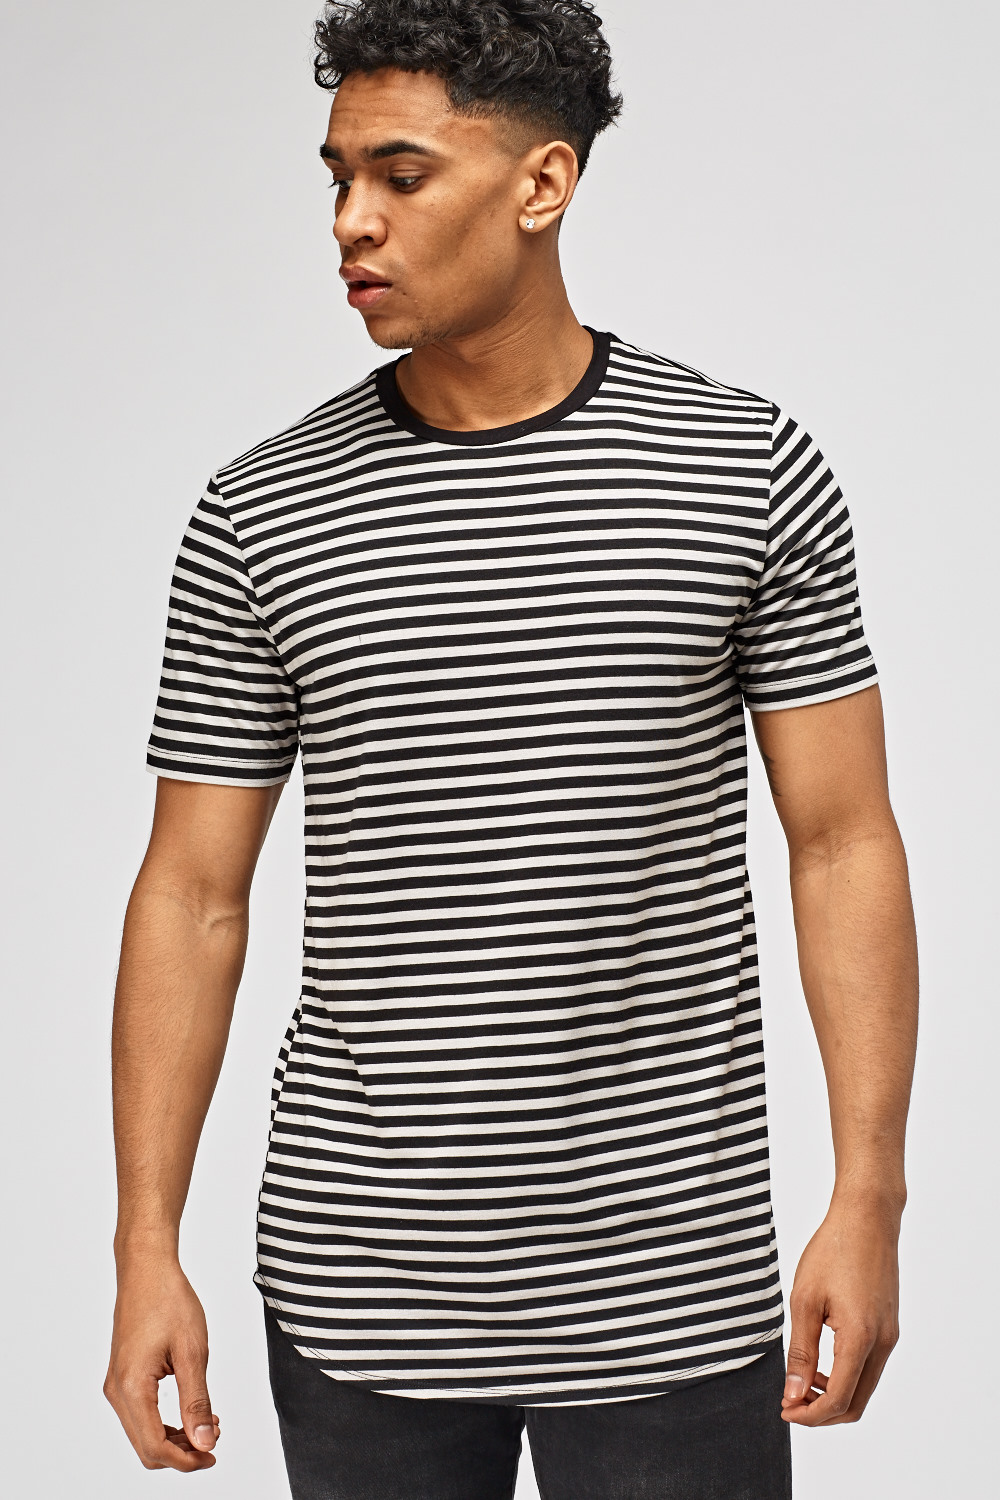 Striped Round Neck Mens T-Shirt - Just $7